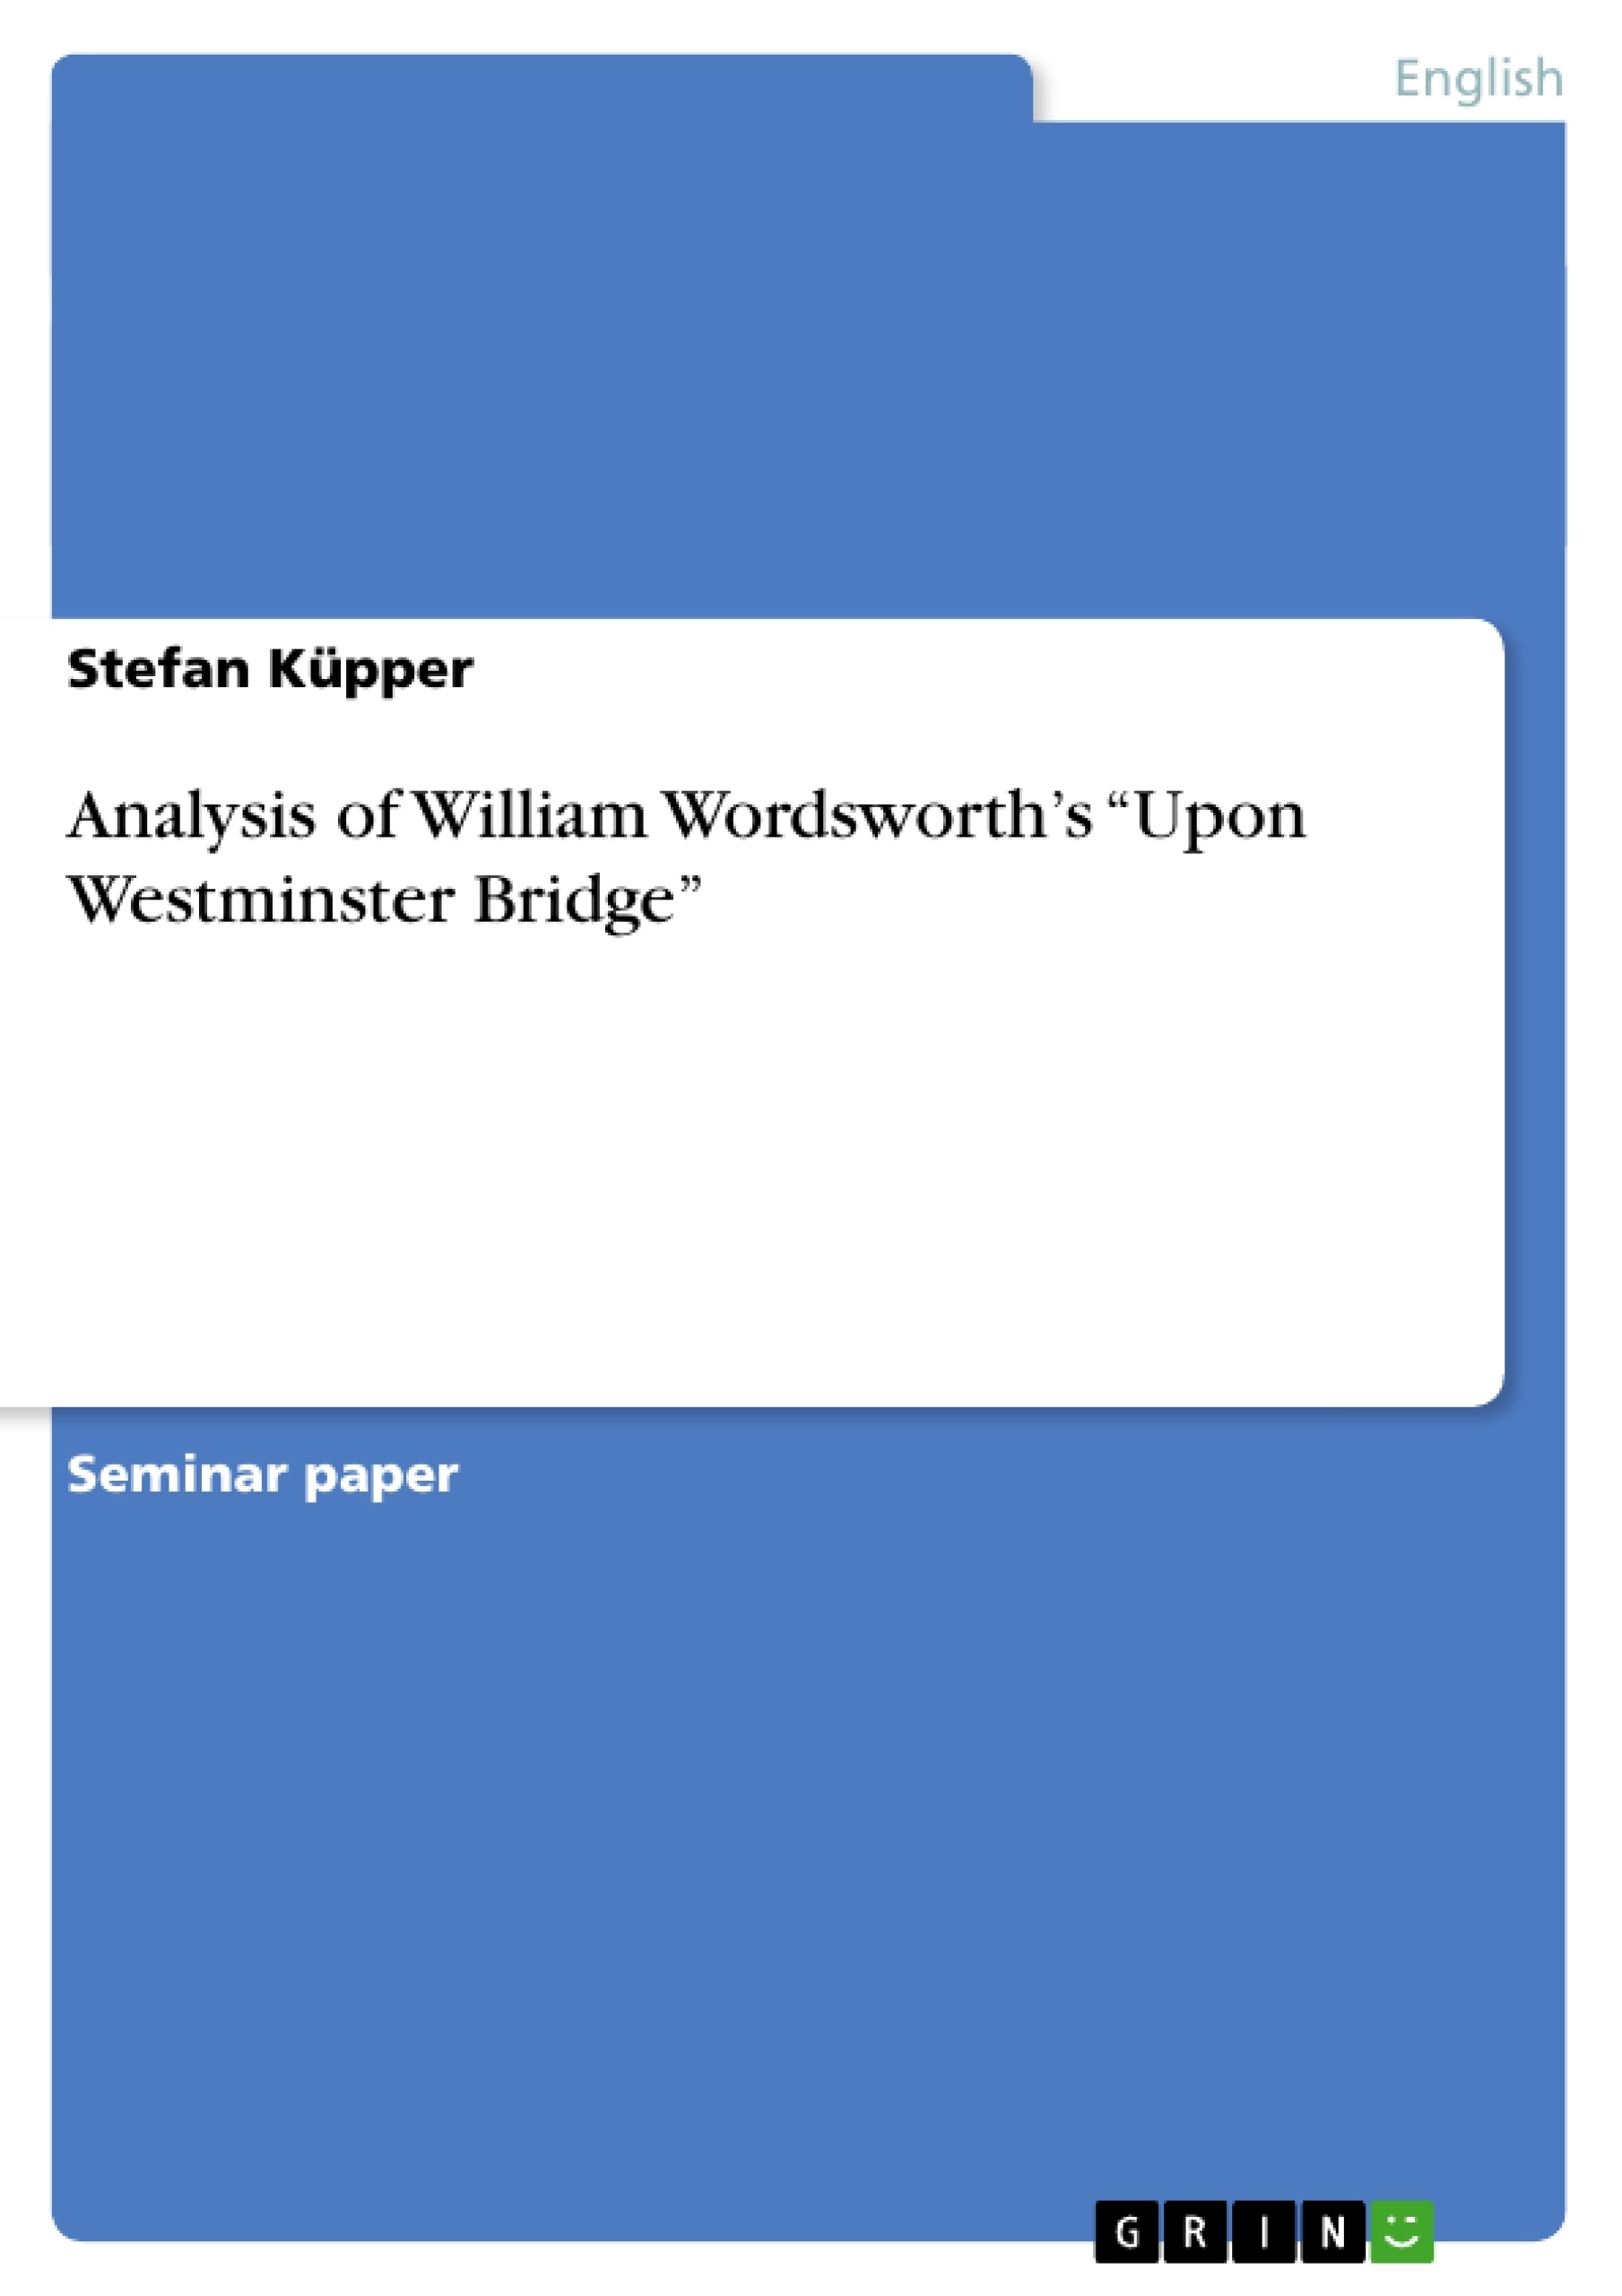 composed upon westminster bridge summary